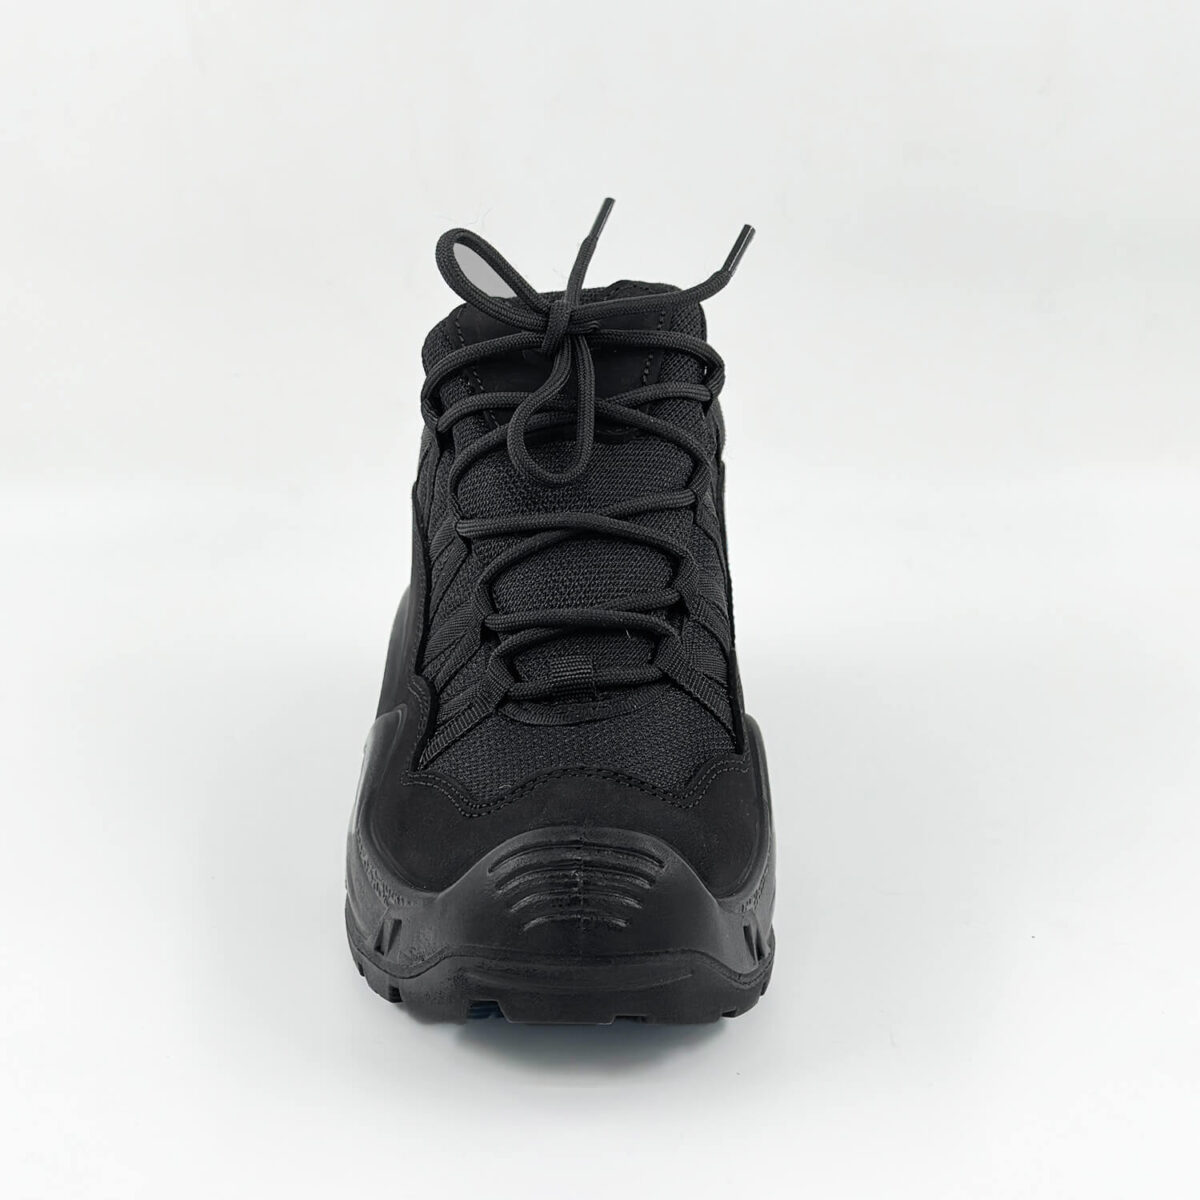 siyah outdoor ayakkabi sugecirmez waterproof vogel1493c 5